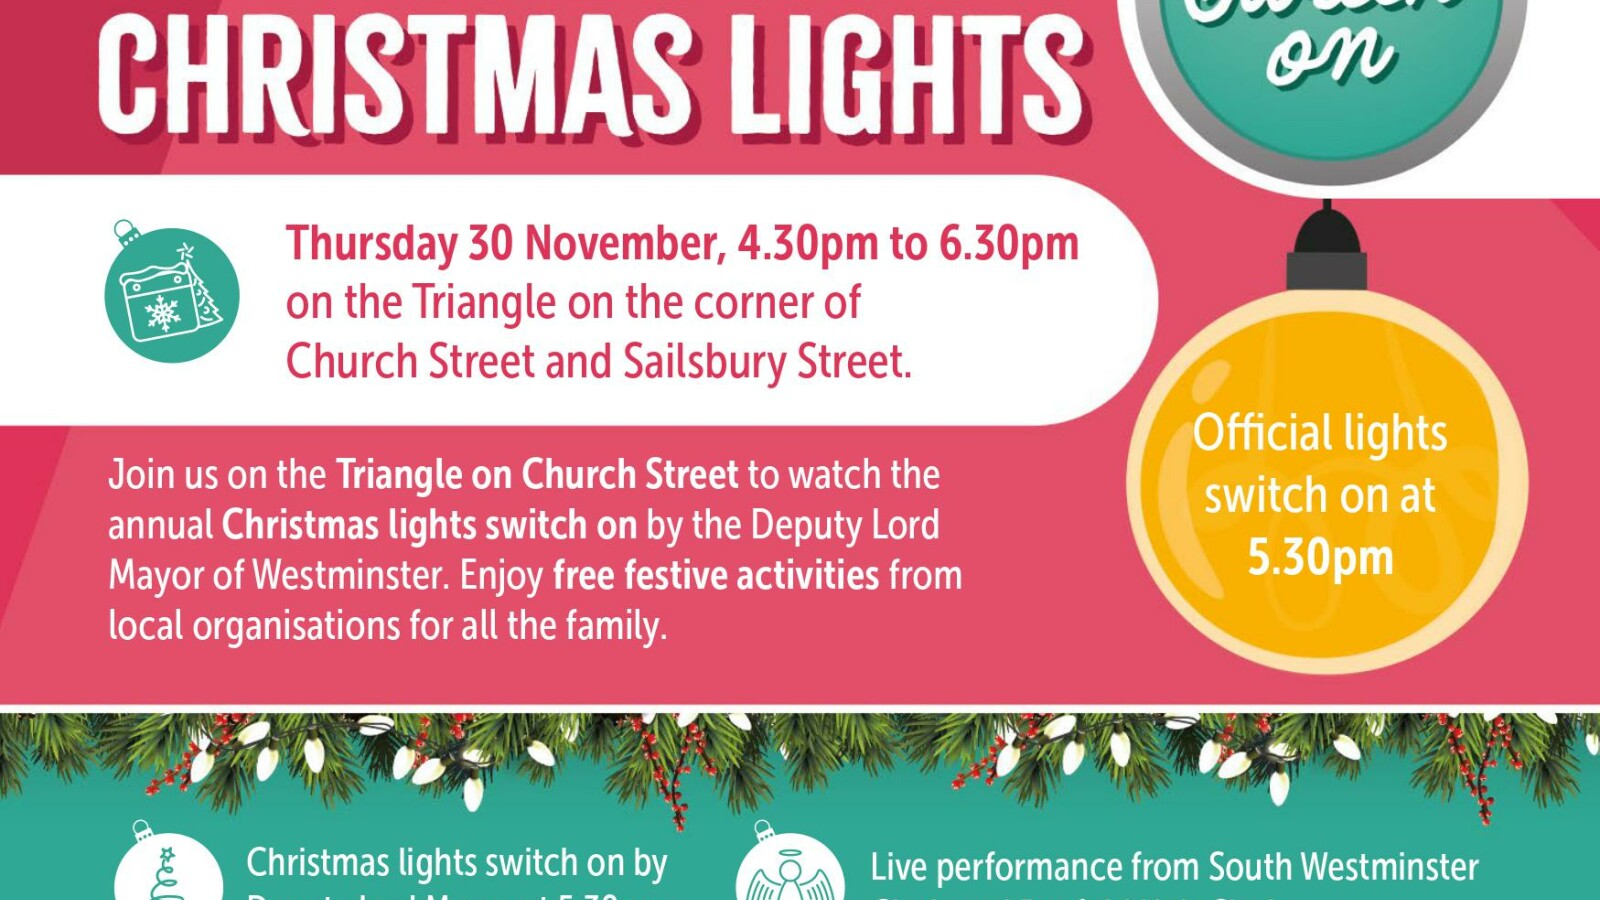 Church Street Xmas lights Nov 23 A5 AW1 web